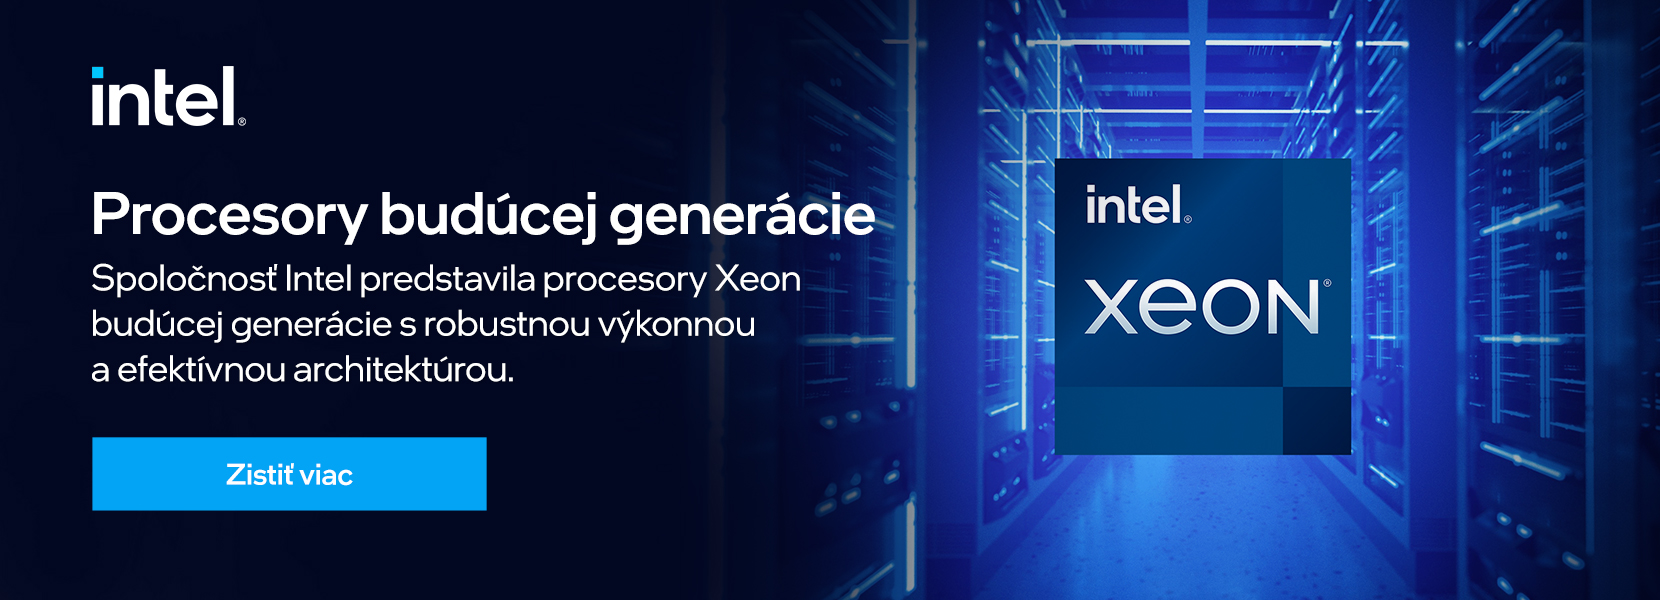 Intel predstavuje procesory XEON budúcej generácie